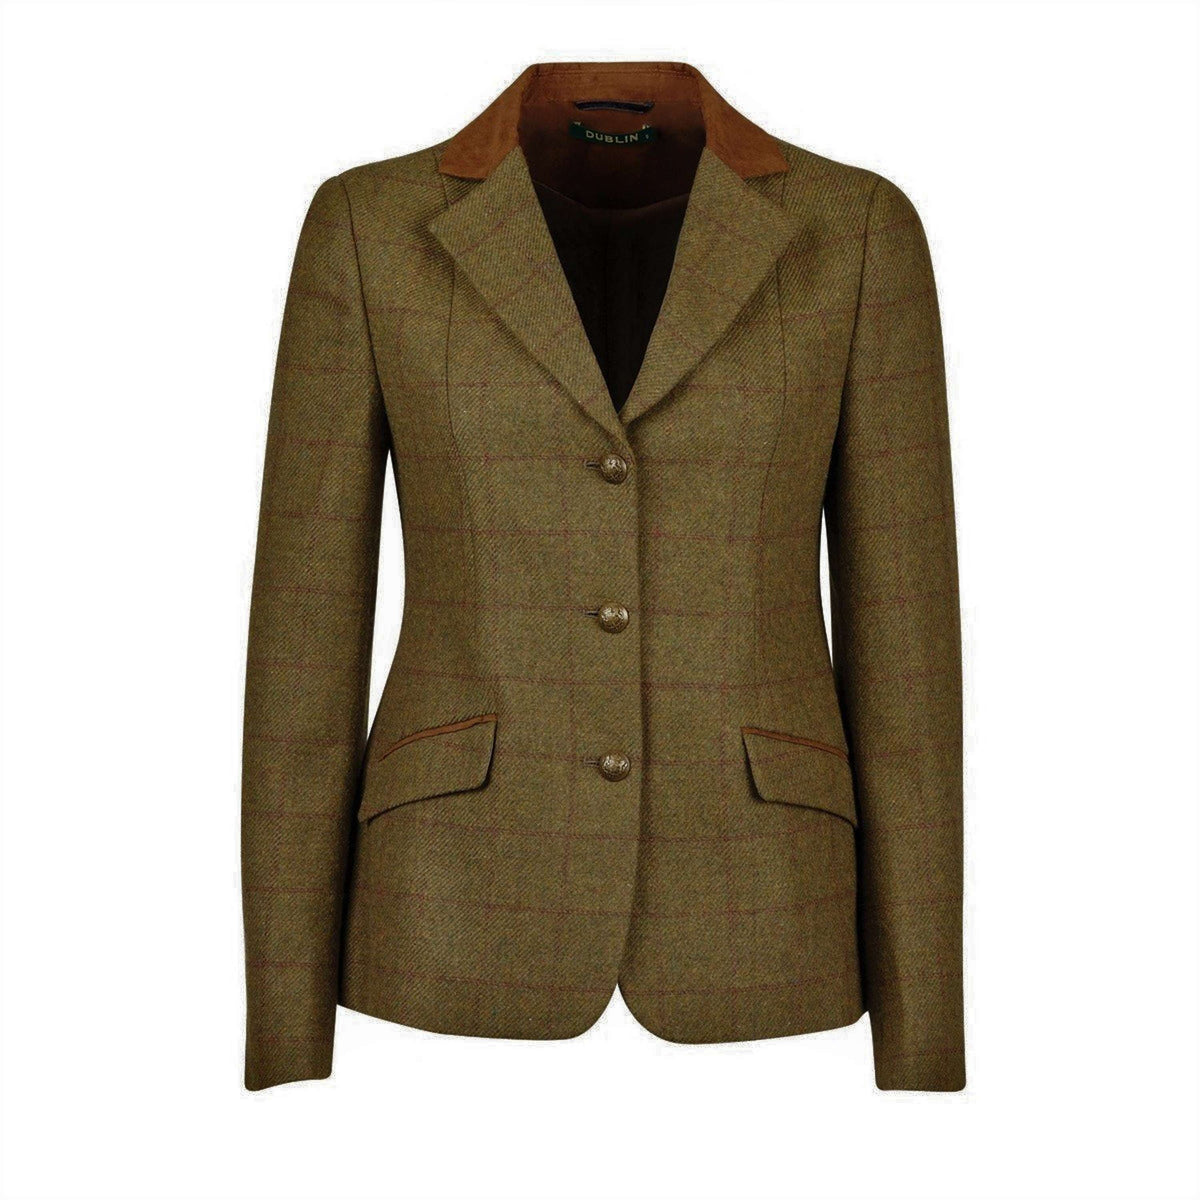 Dublin Turnierjacket Albany Tweed Suede Collar Tailored Braun/Grün